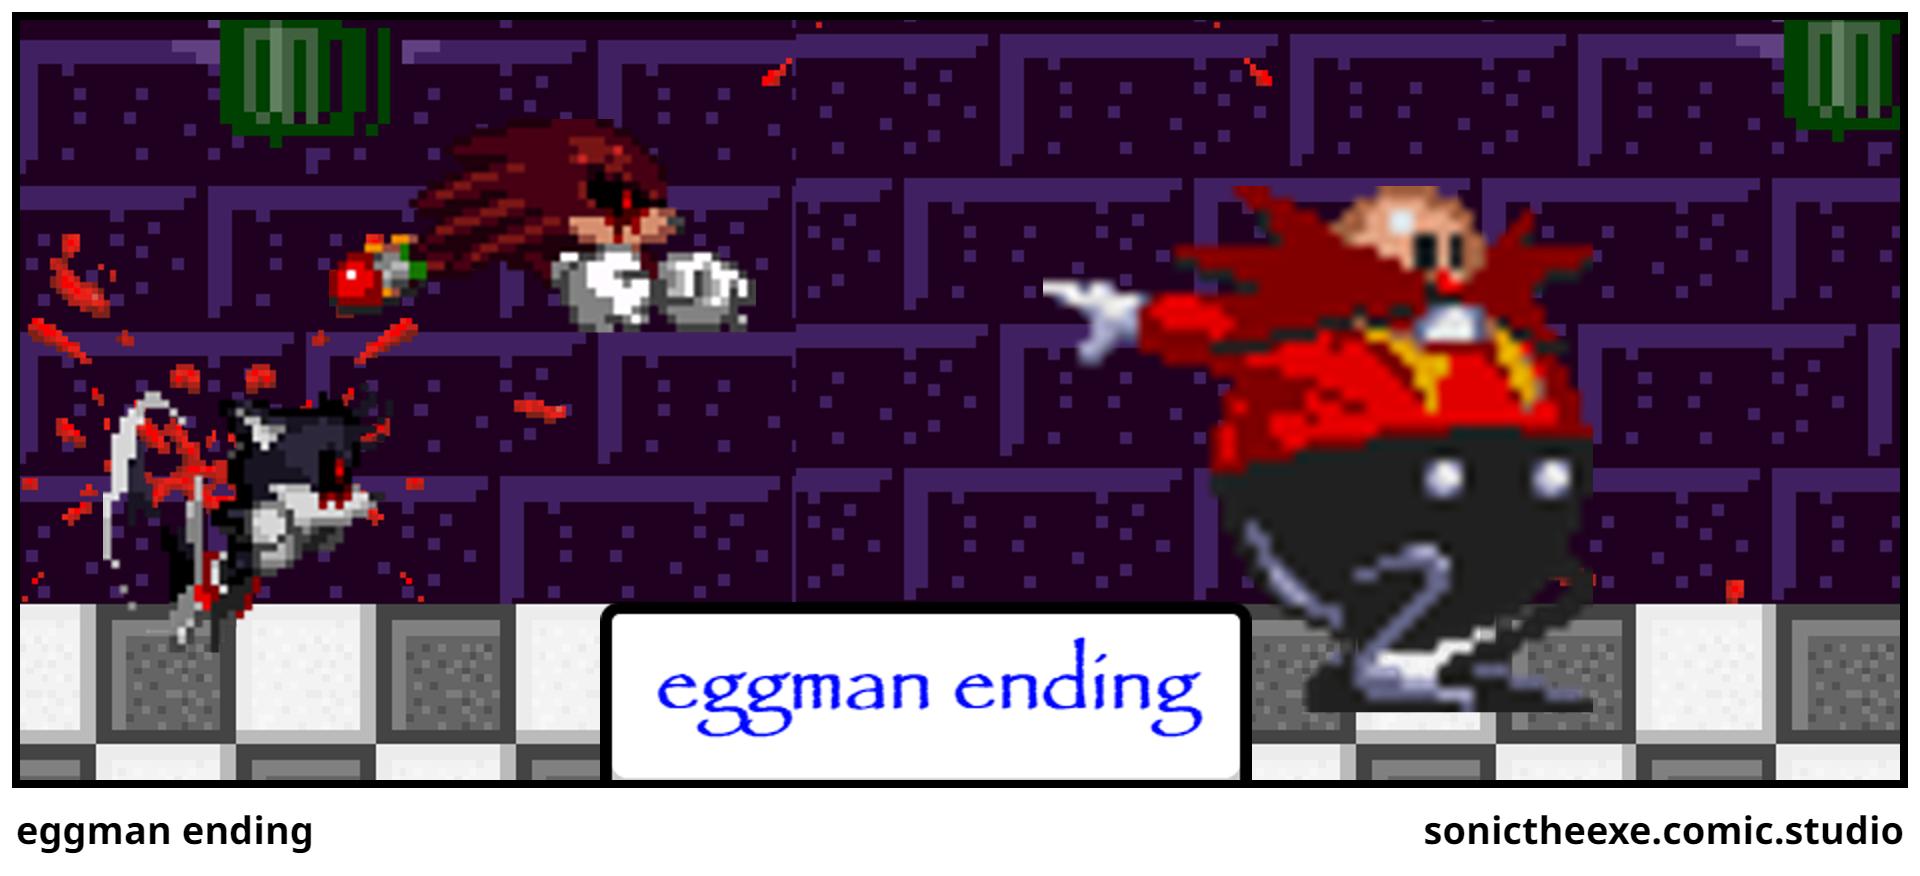 eggman ending